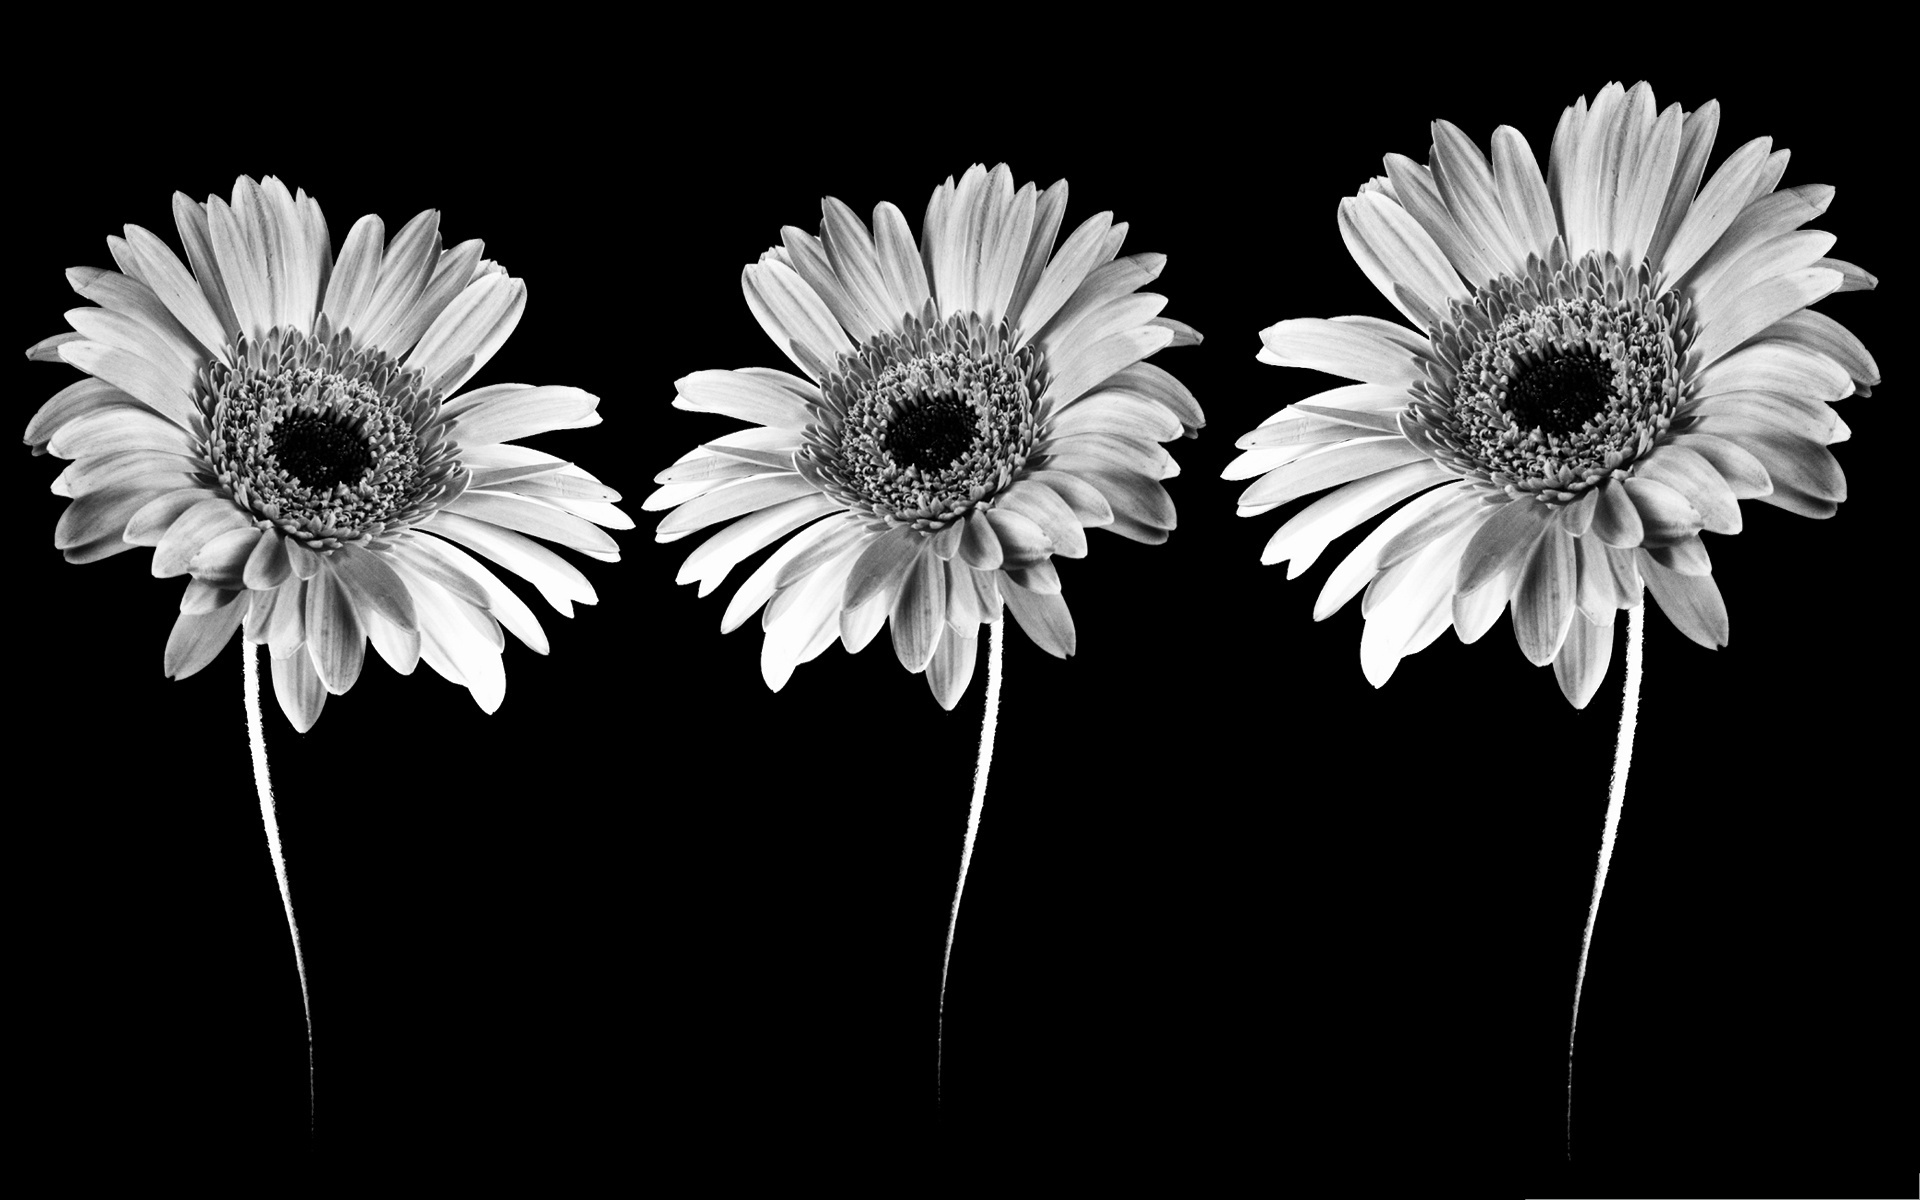 Black and white flowers wallpapers HD | PixelsTalk.Net